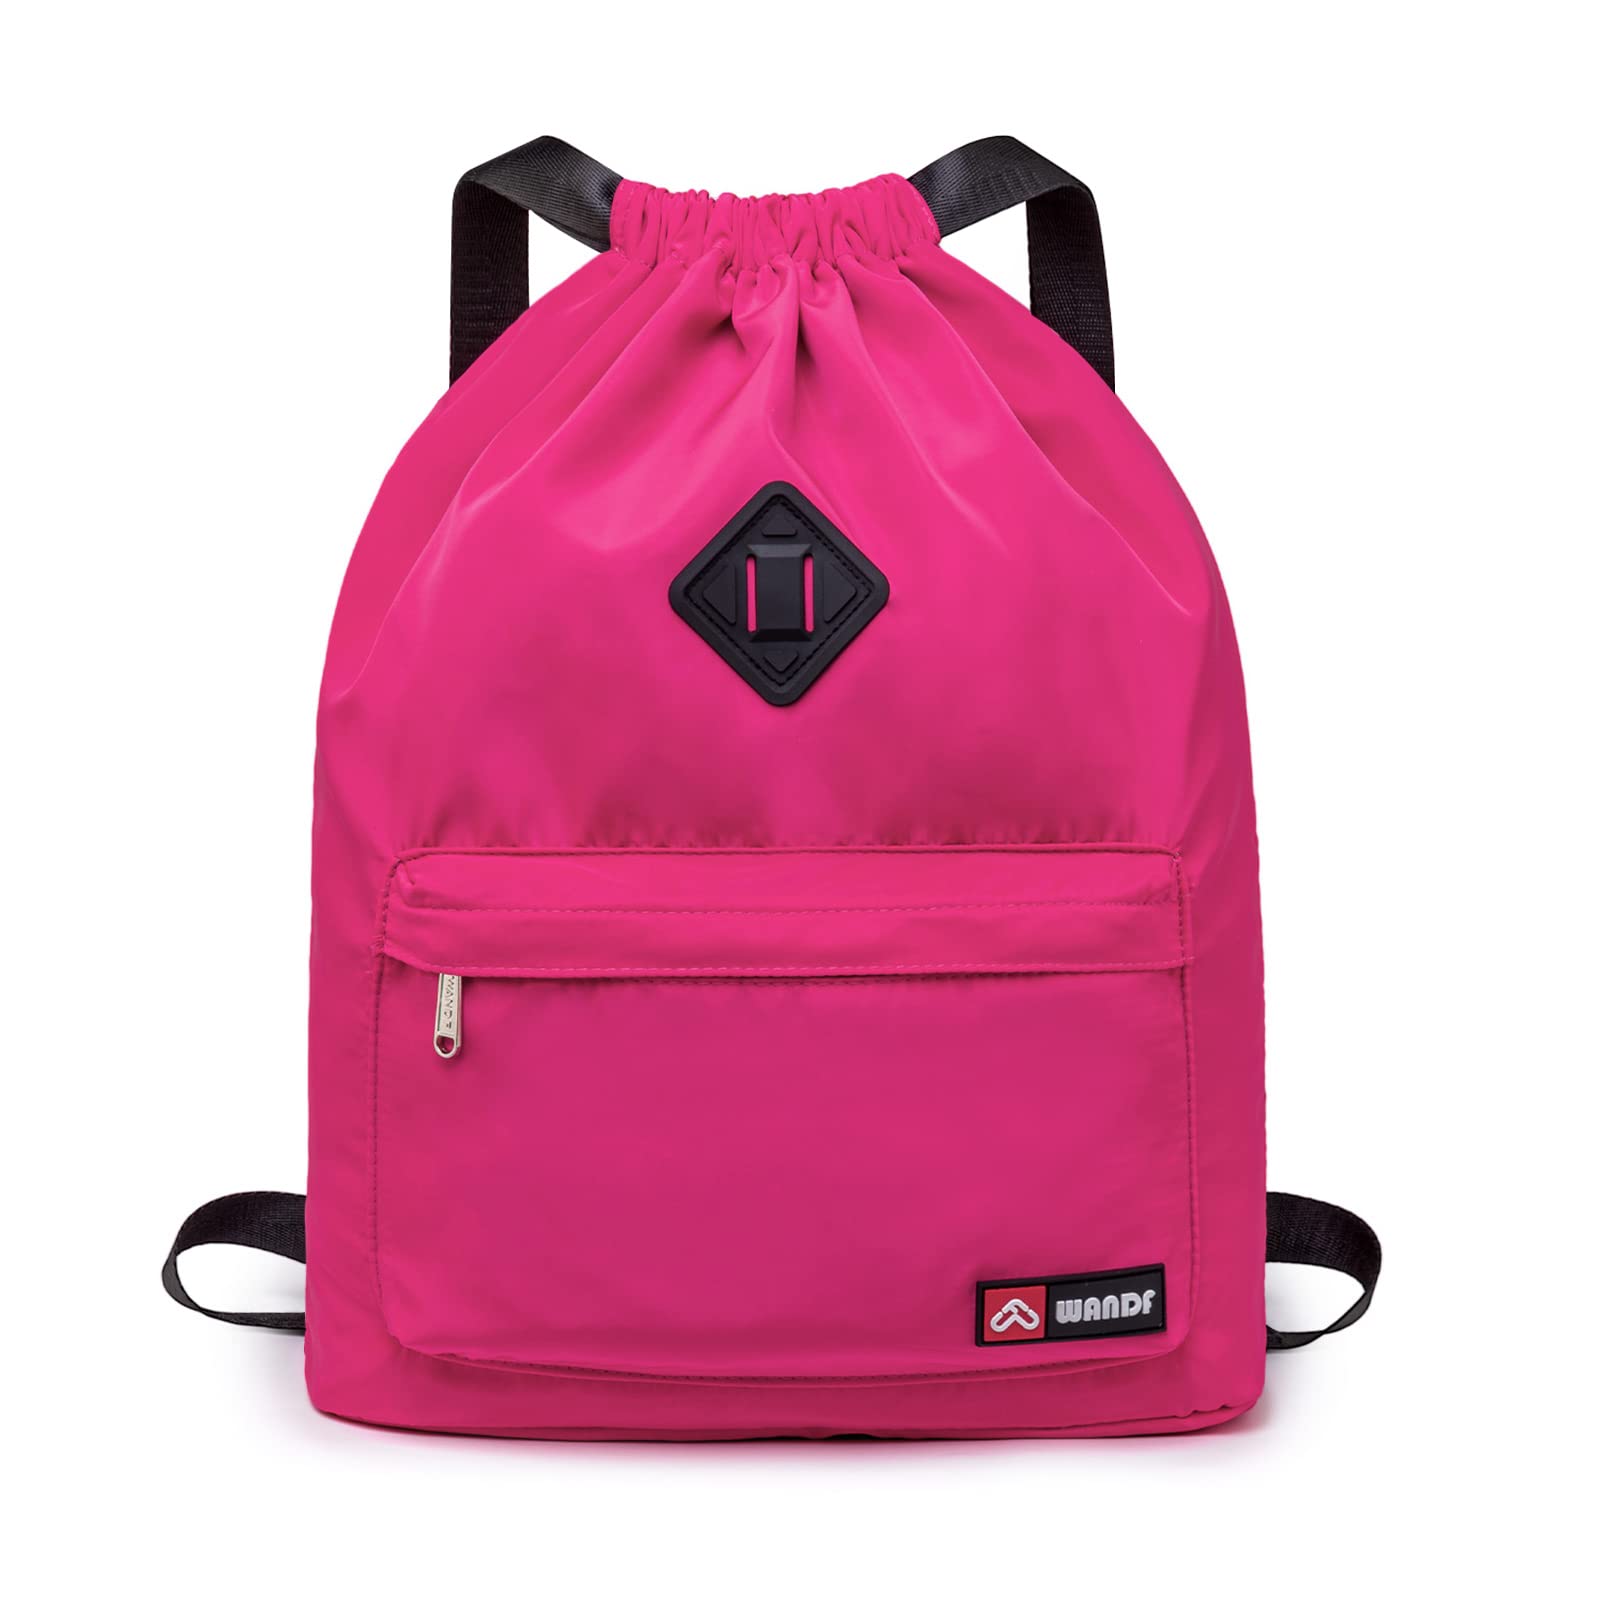 Buy Drawsting-Backpack-Bulk-32 Pieces Cinch Drawstring Bag Gym Drawstring  Backpacks 16 Colors at Amazon.in